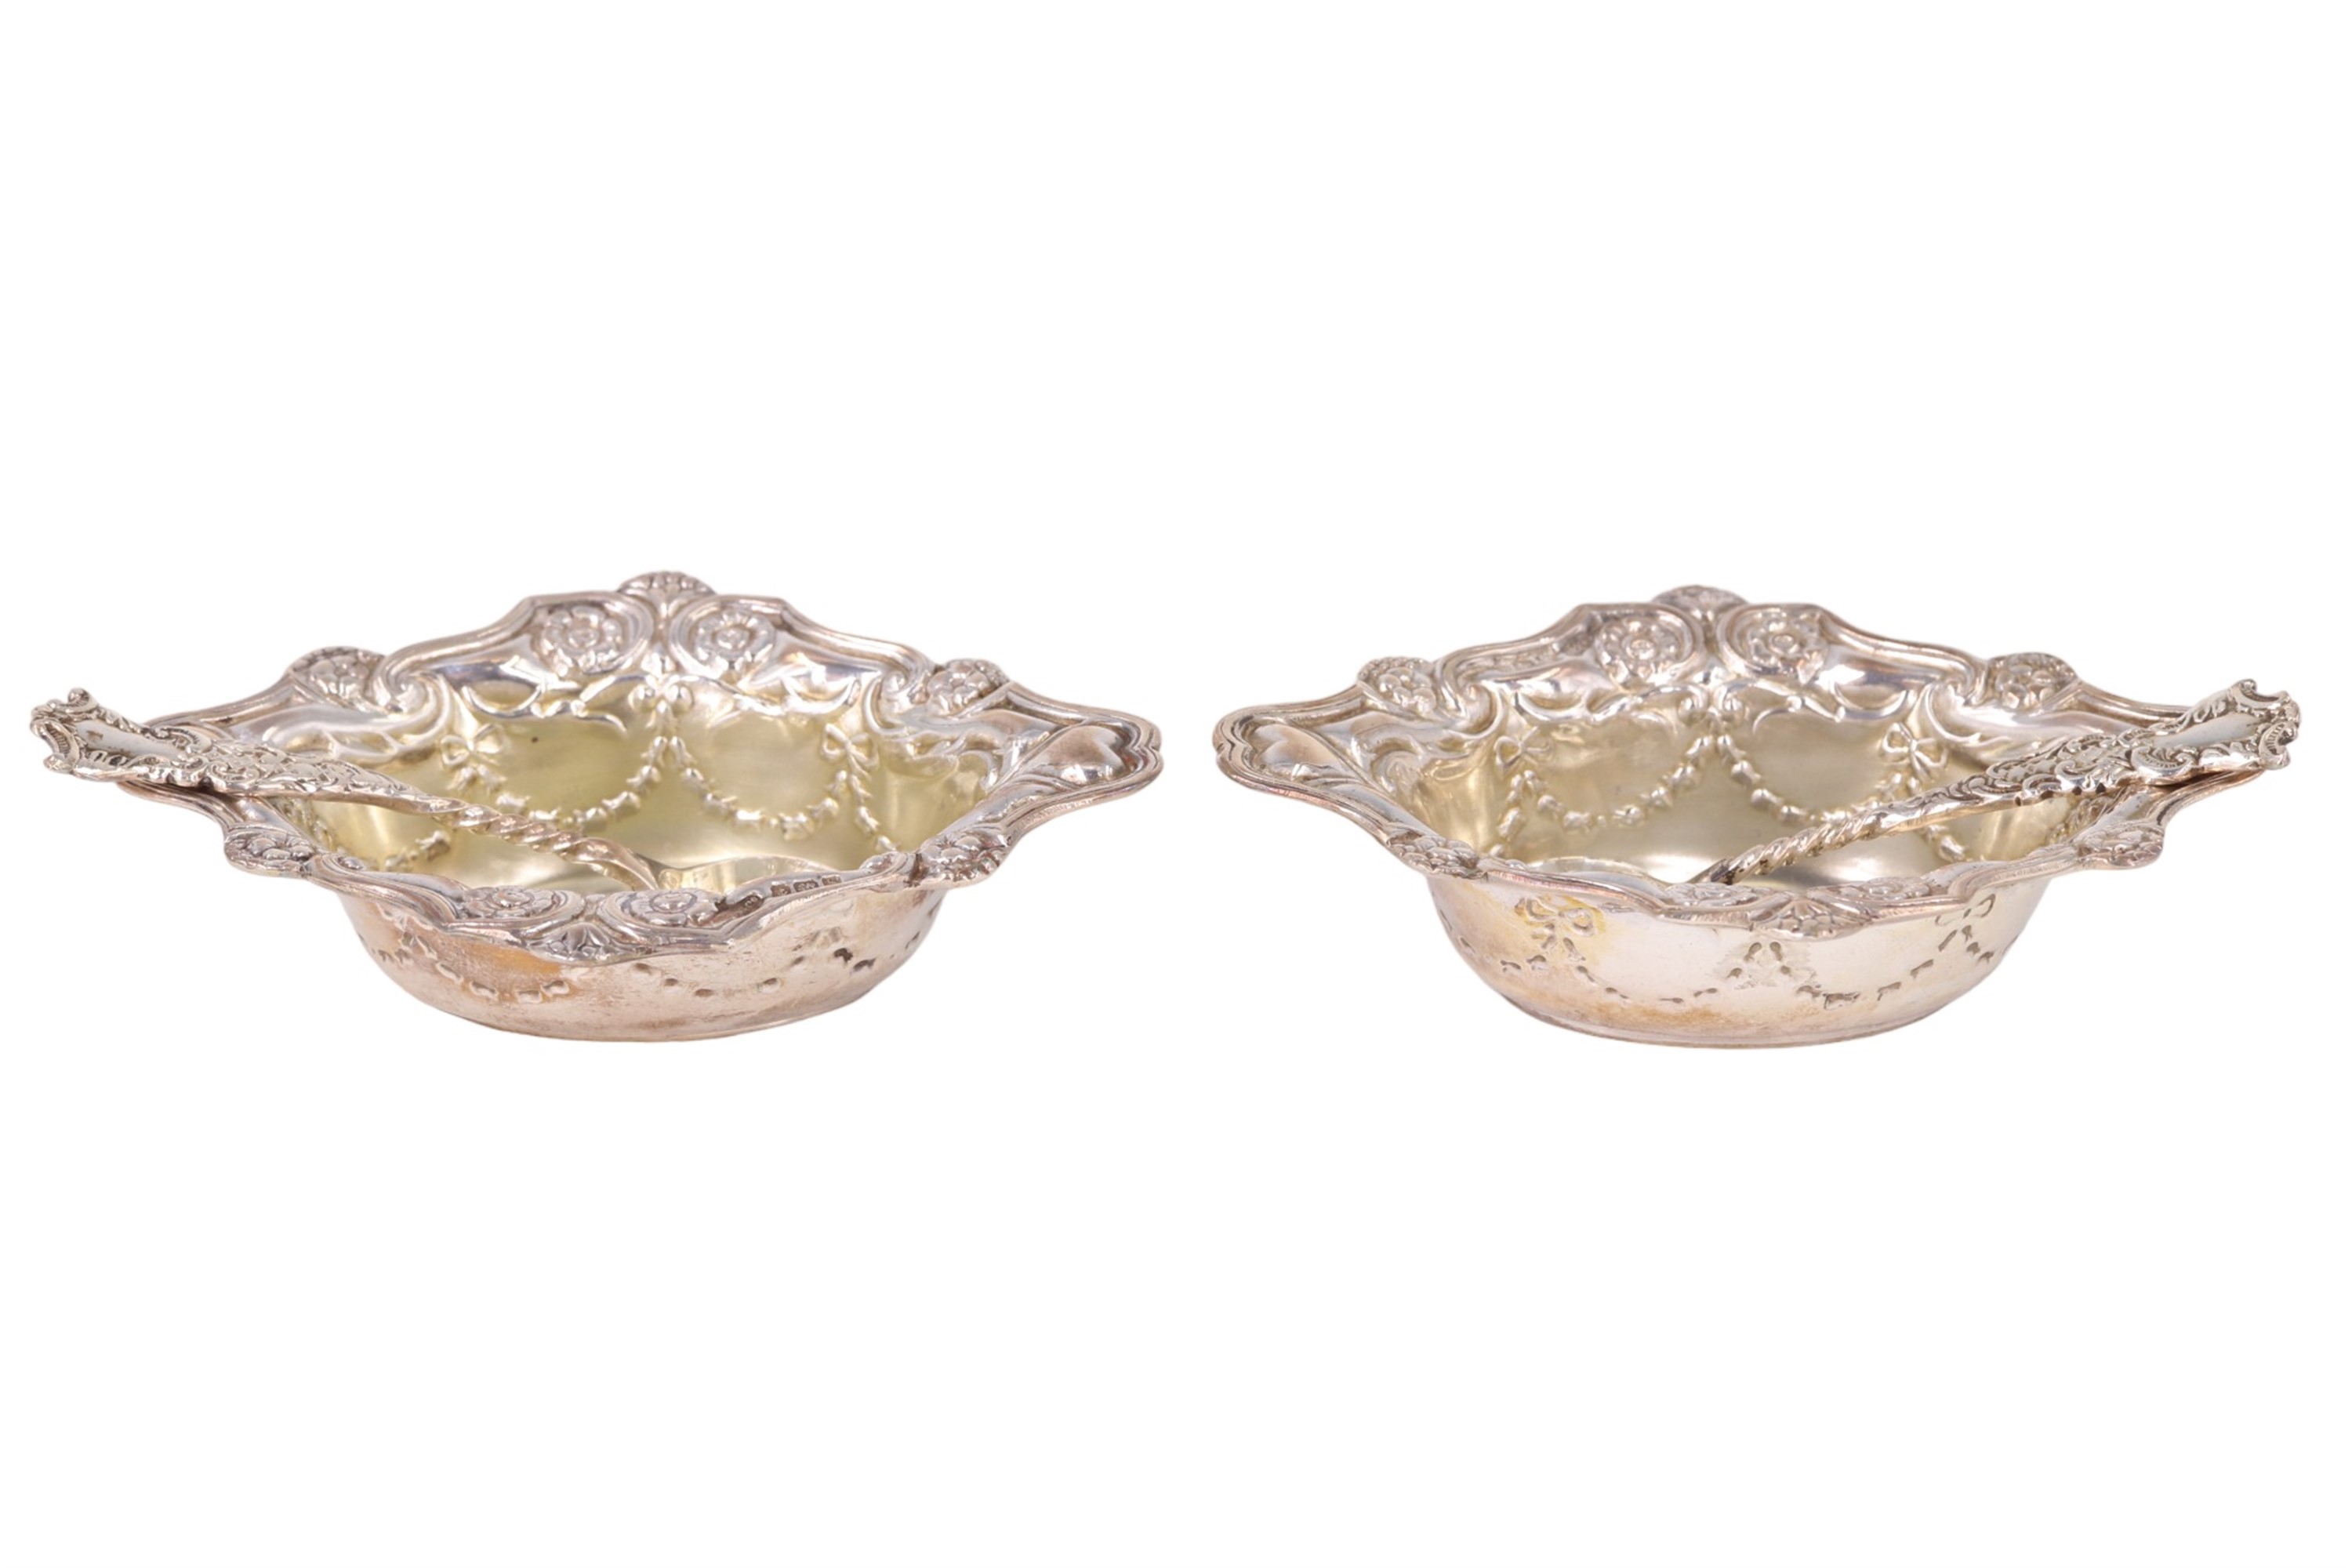 A cased pair of Edwardian silver salt cellars, having embossed decoration, associated spoons,